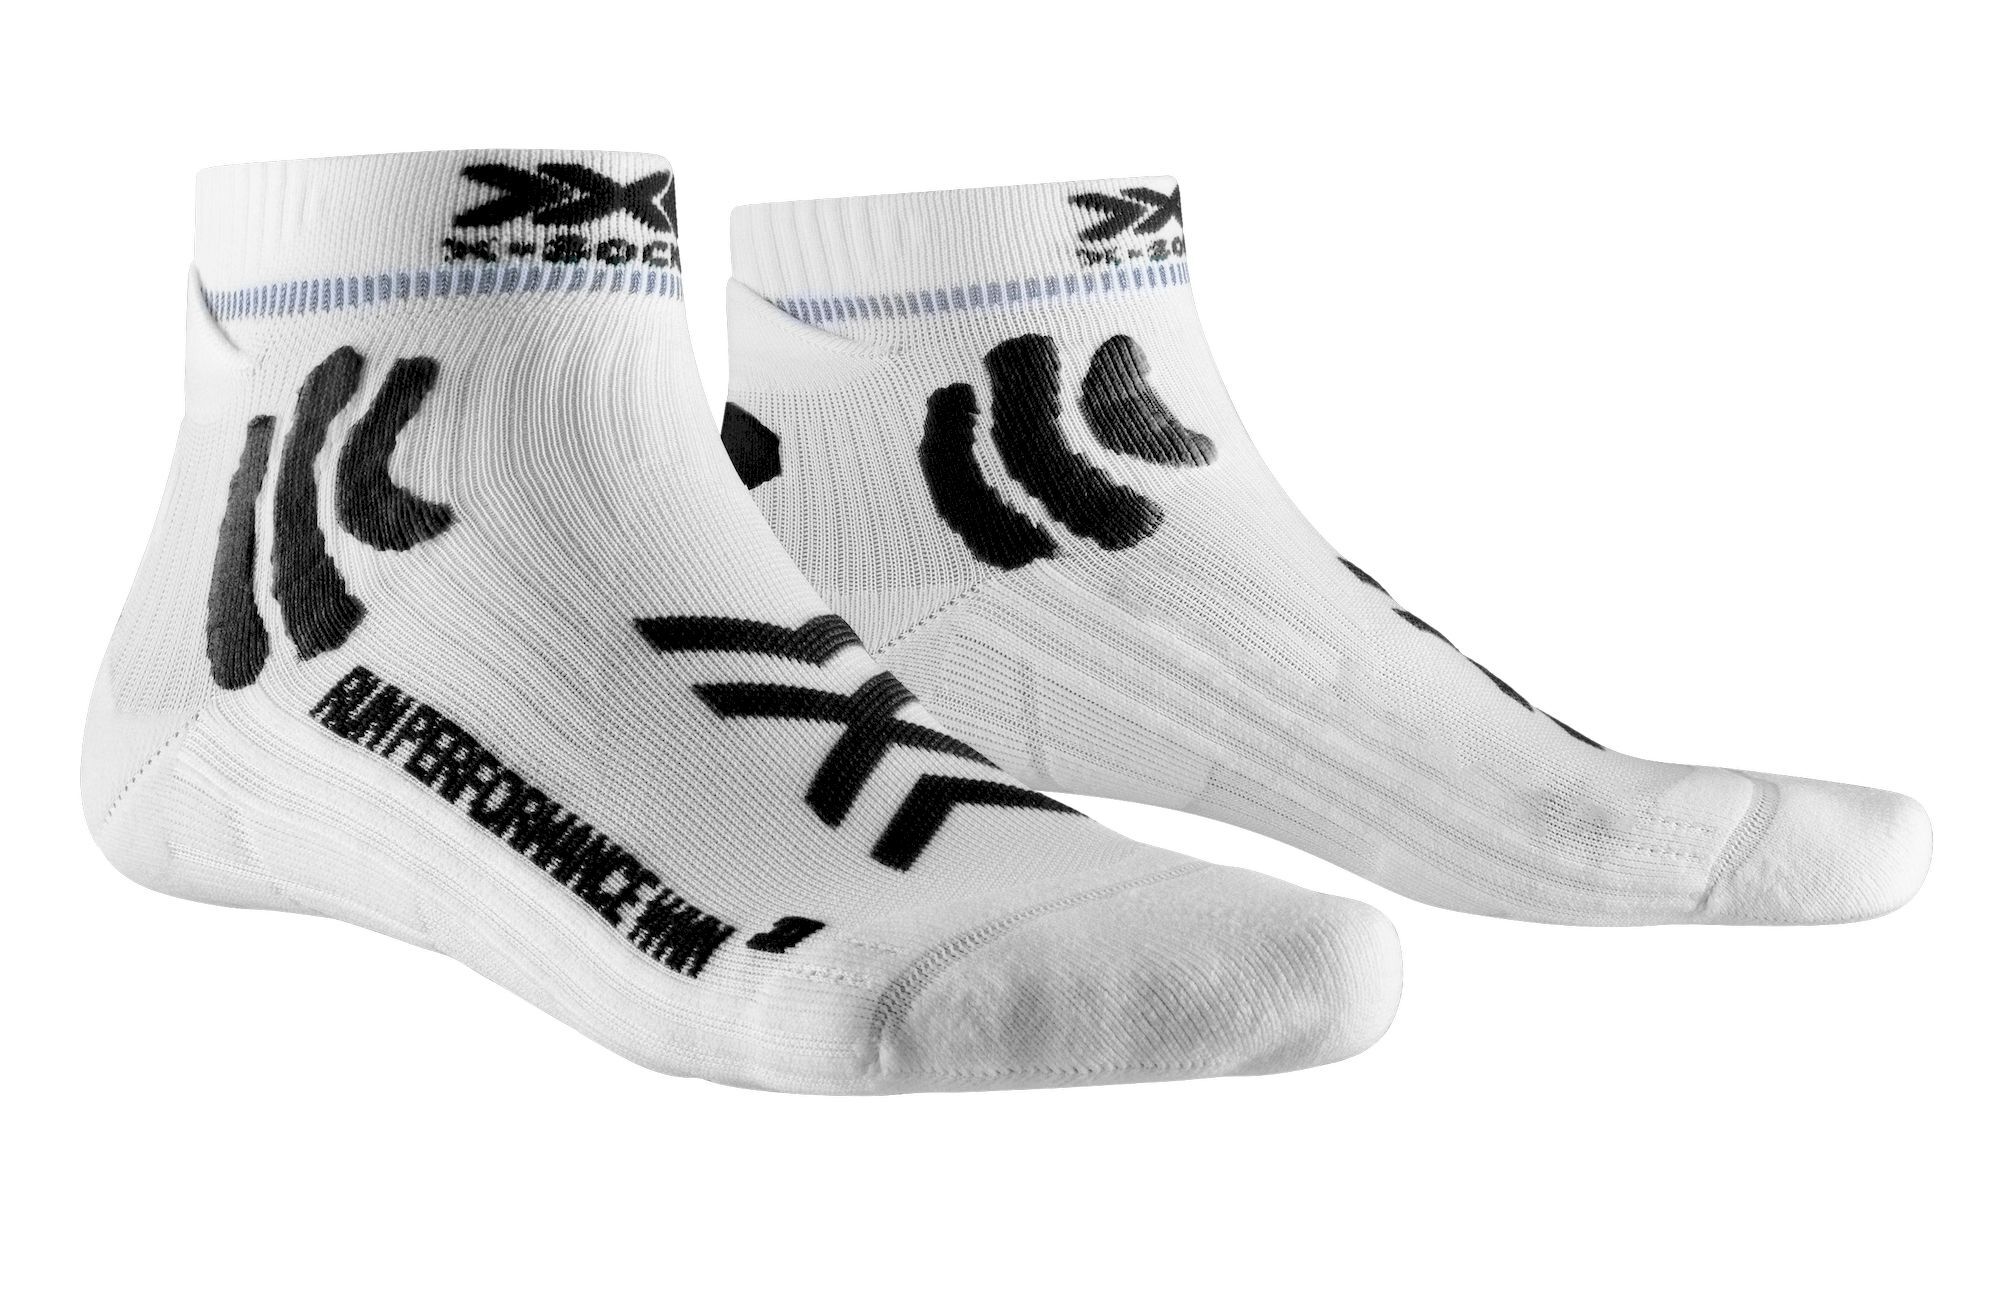 X-Socks Run Speed Two 4.0 - Chaussettes running femme